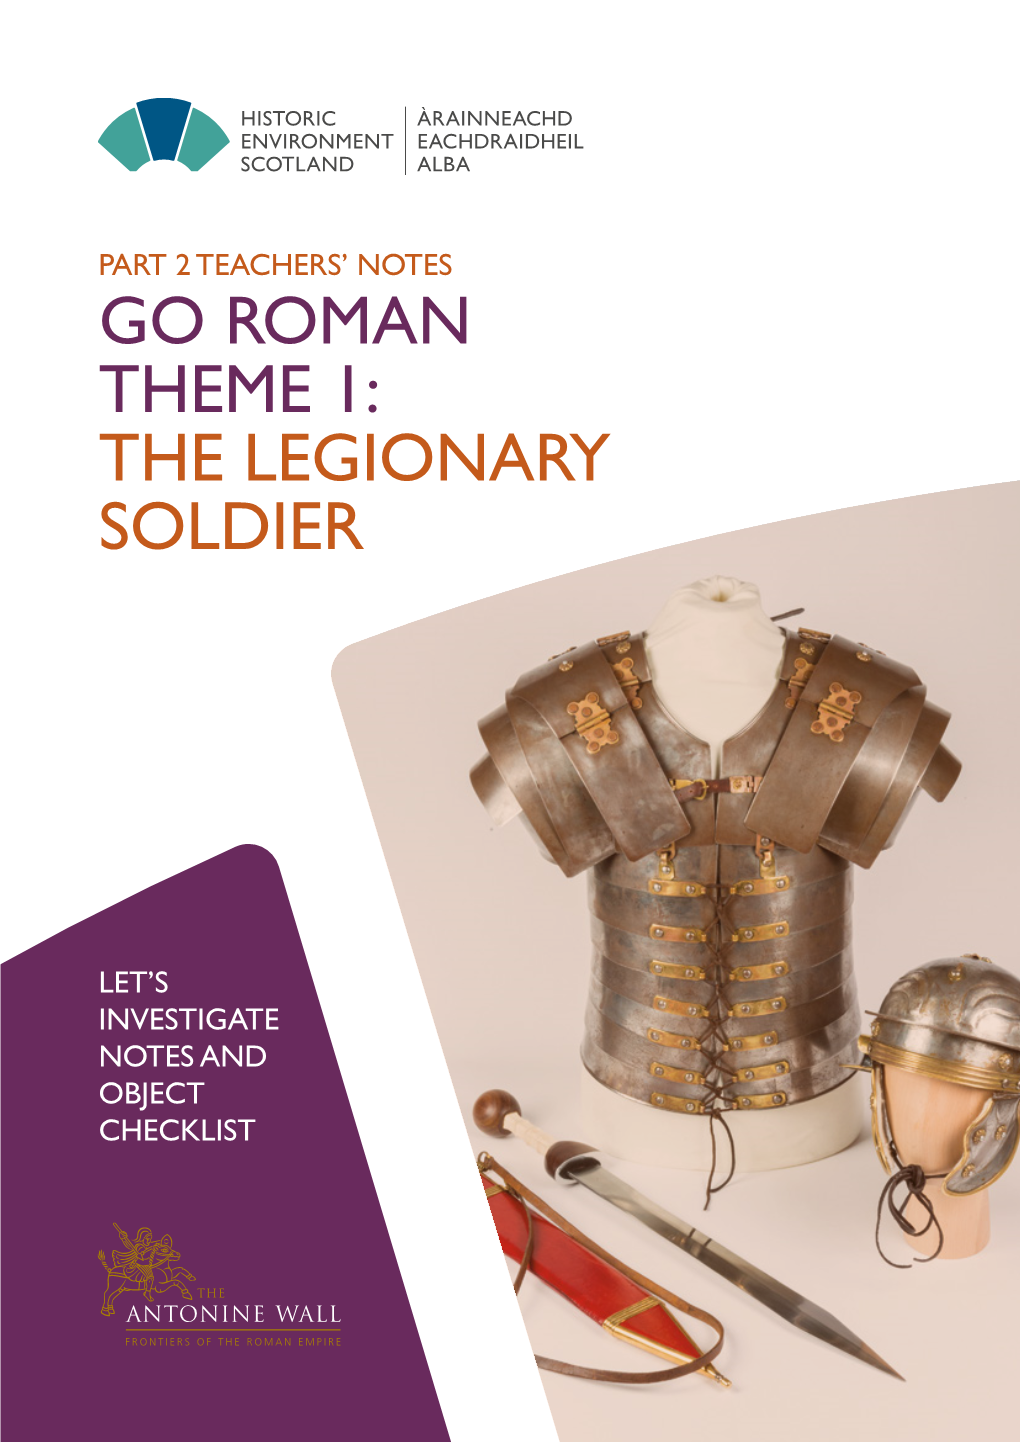 Go Roman Theme 1: the Legionary Soldier